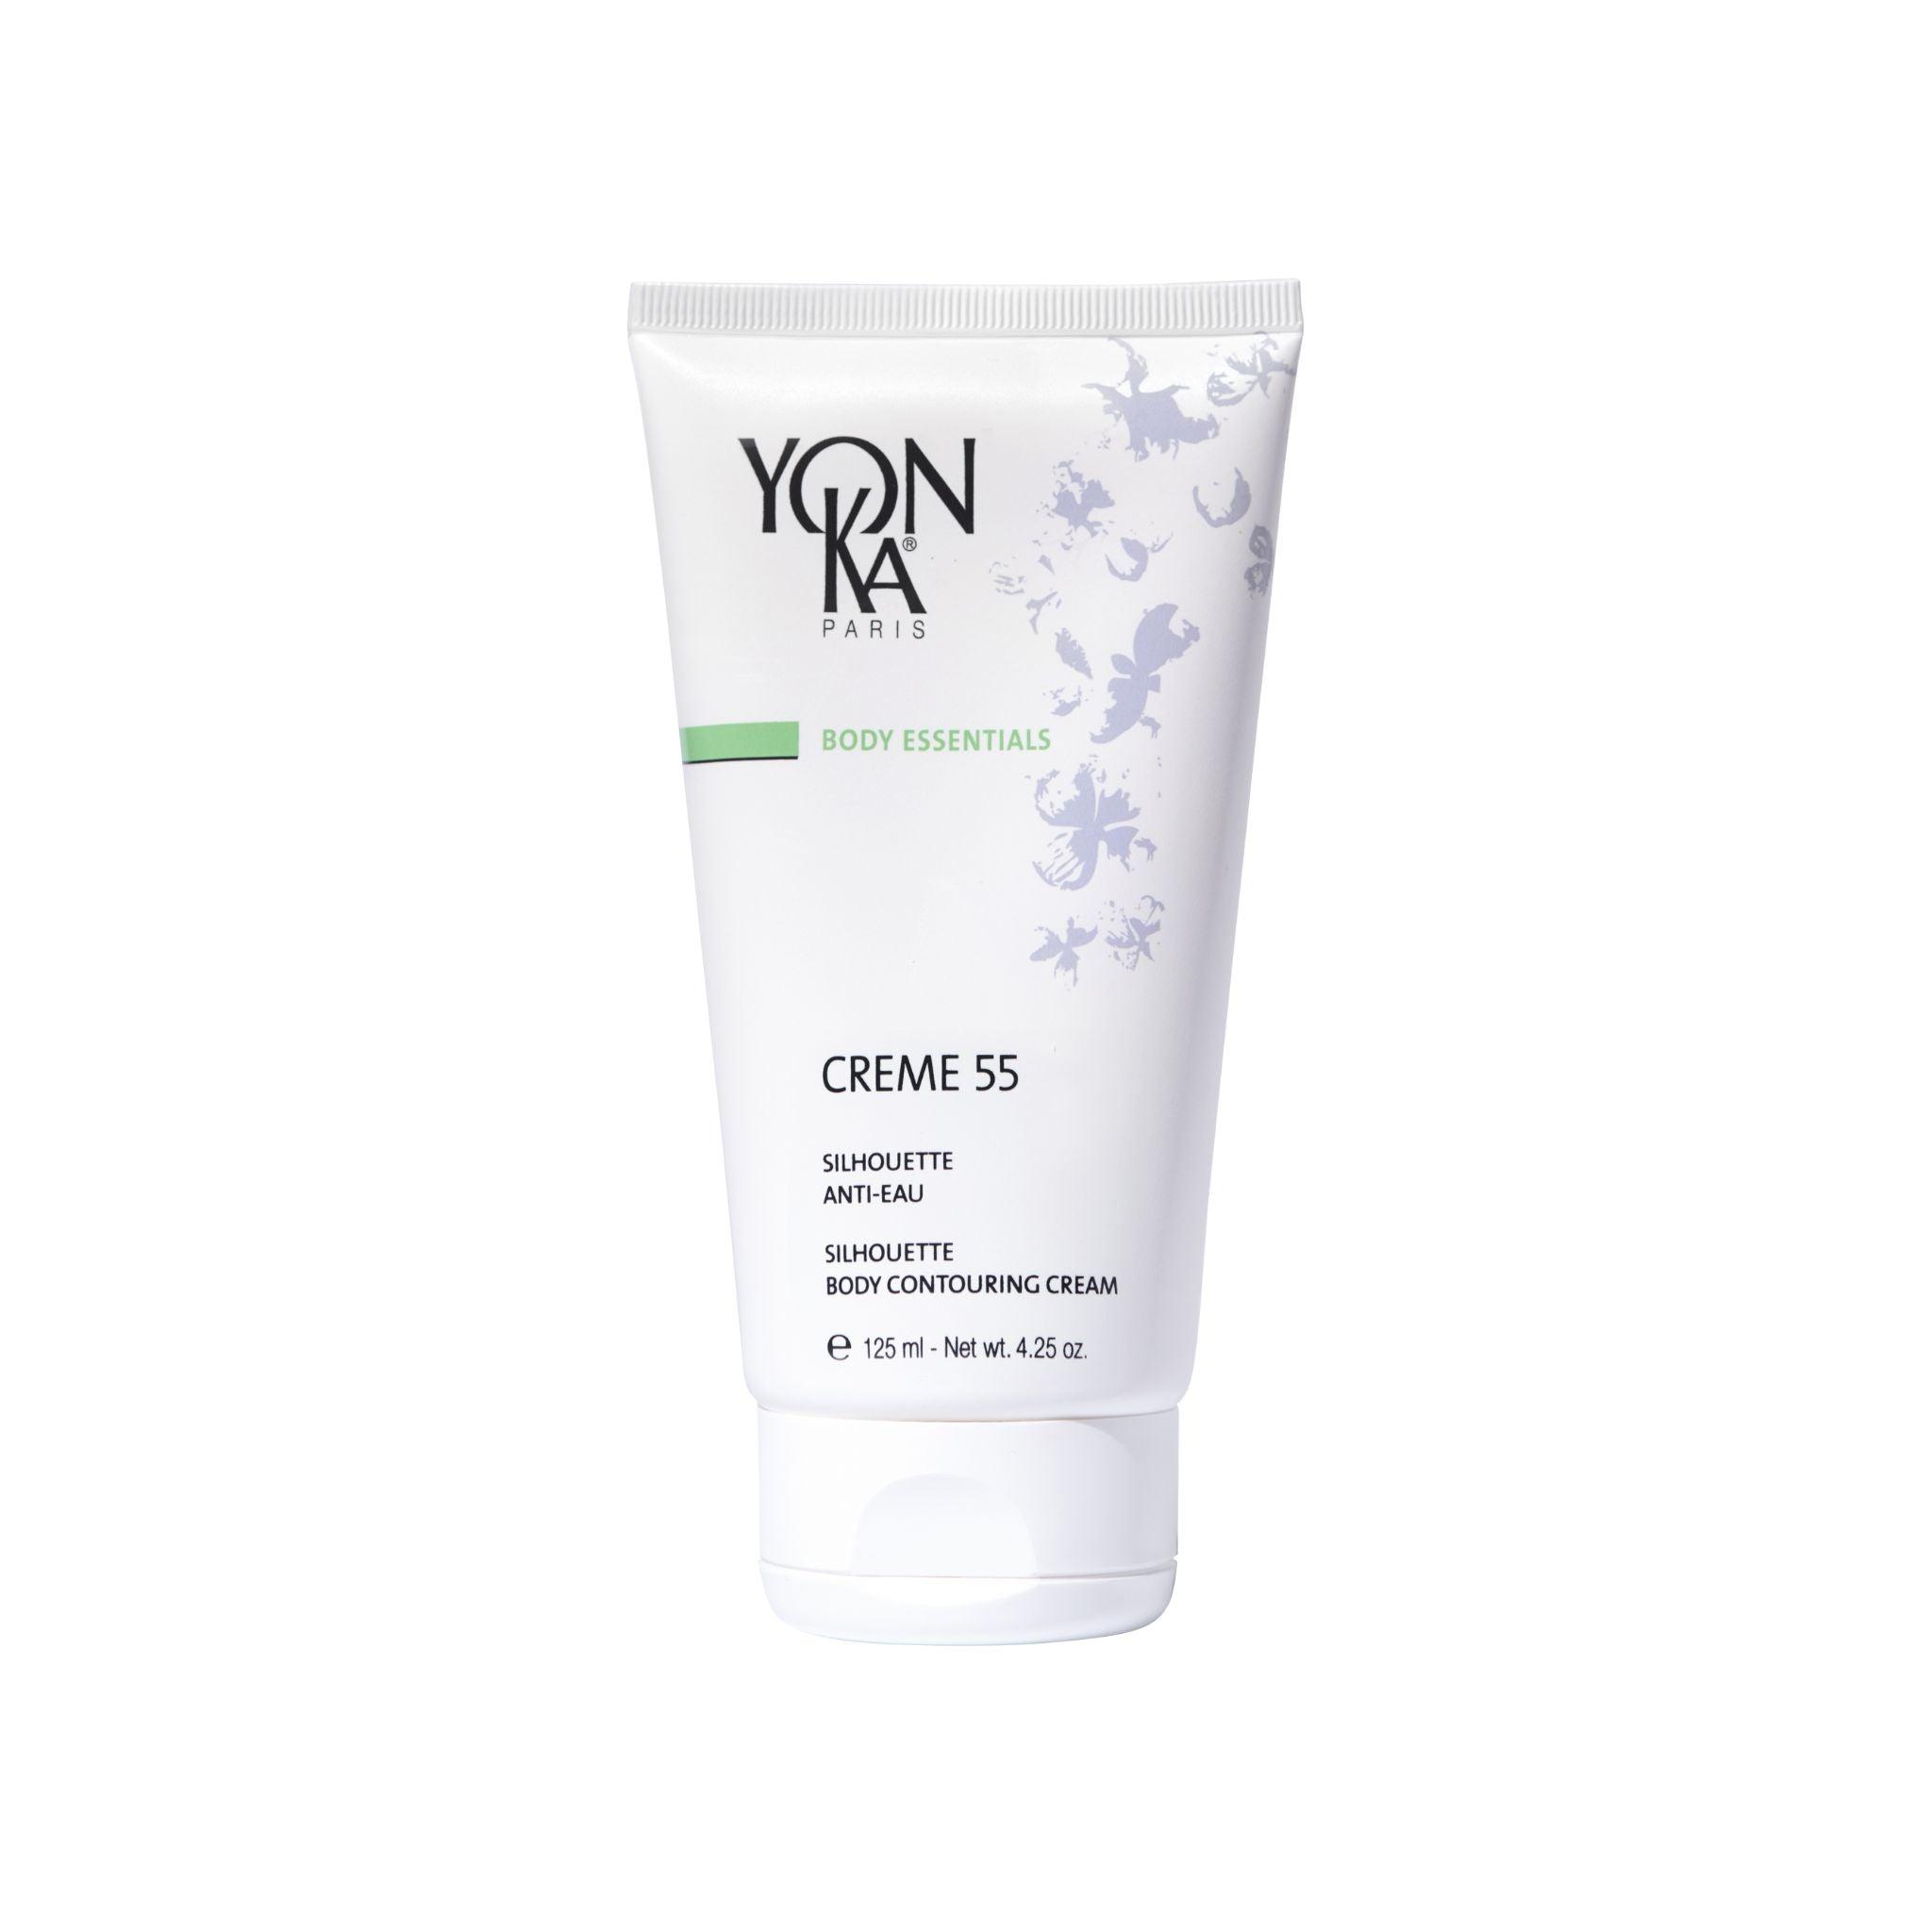 YonKa Creme 55 Body Contouring Cream - The Beauty House Shop